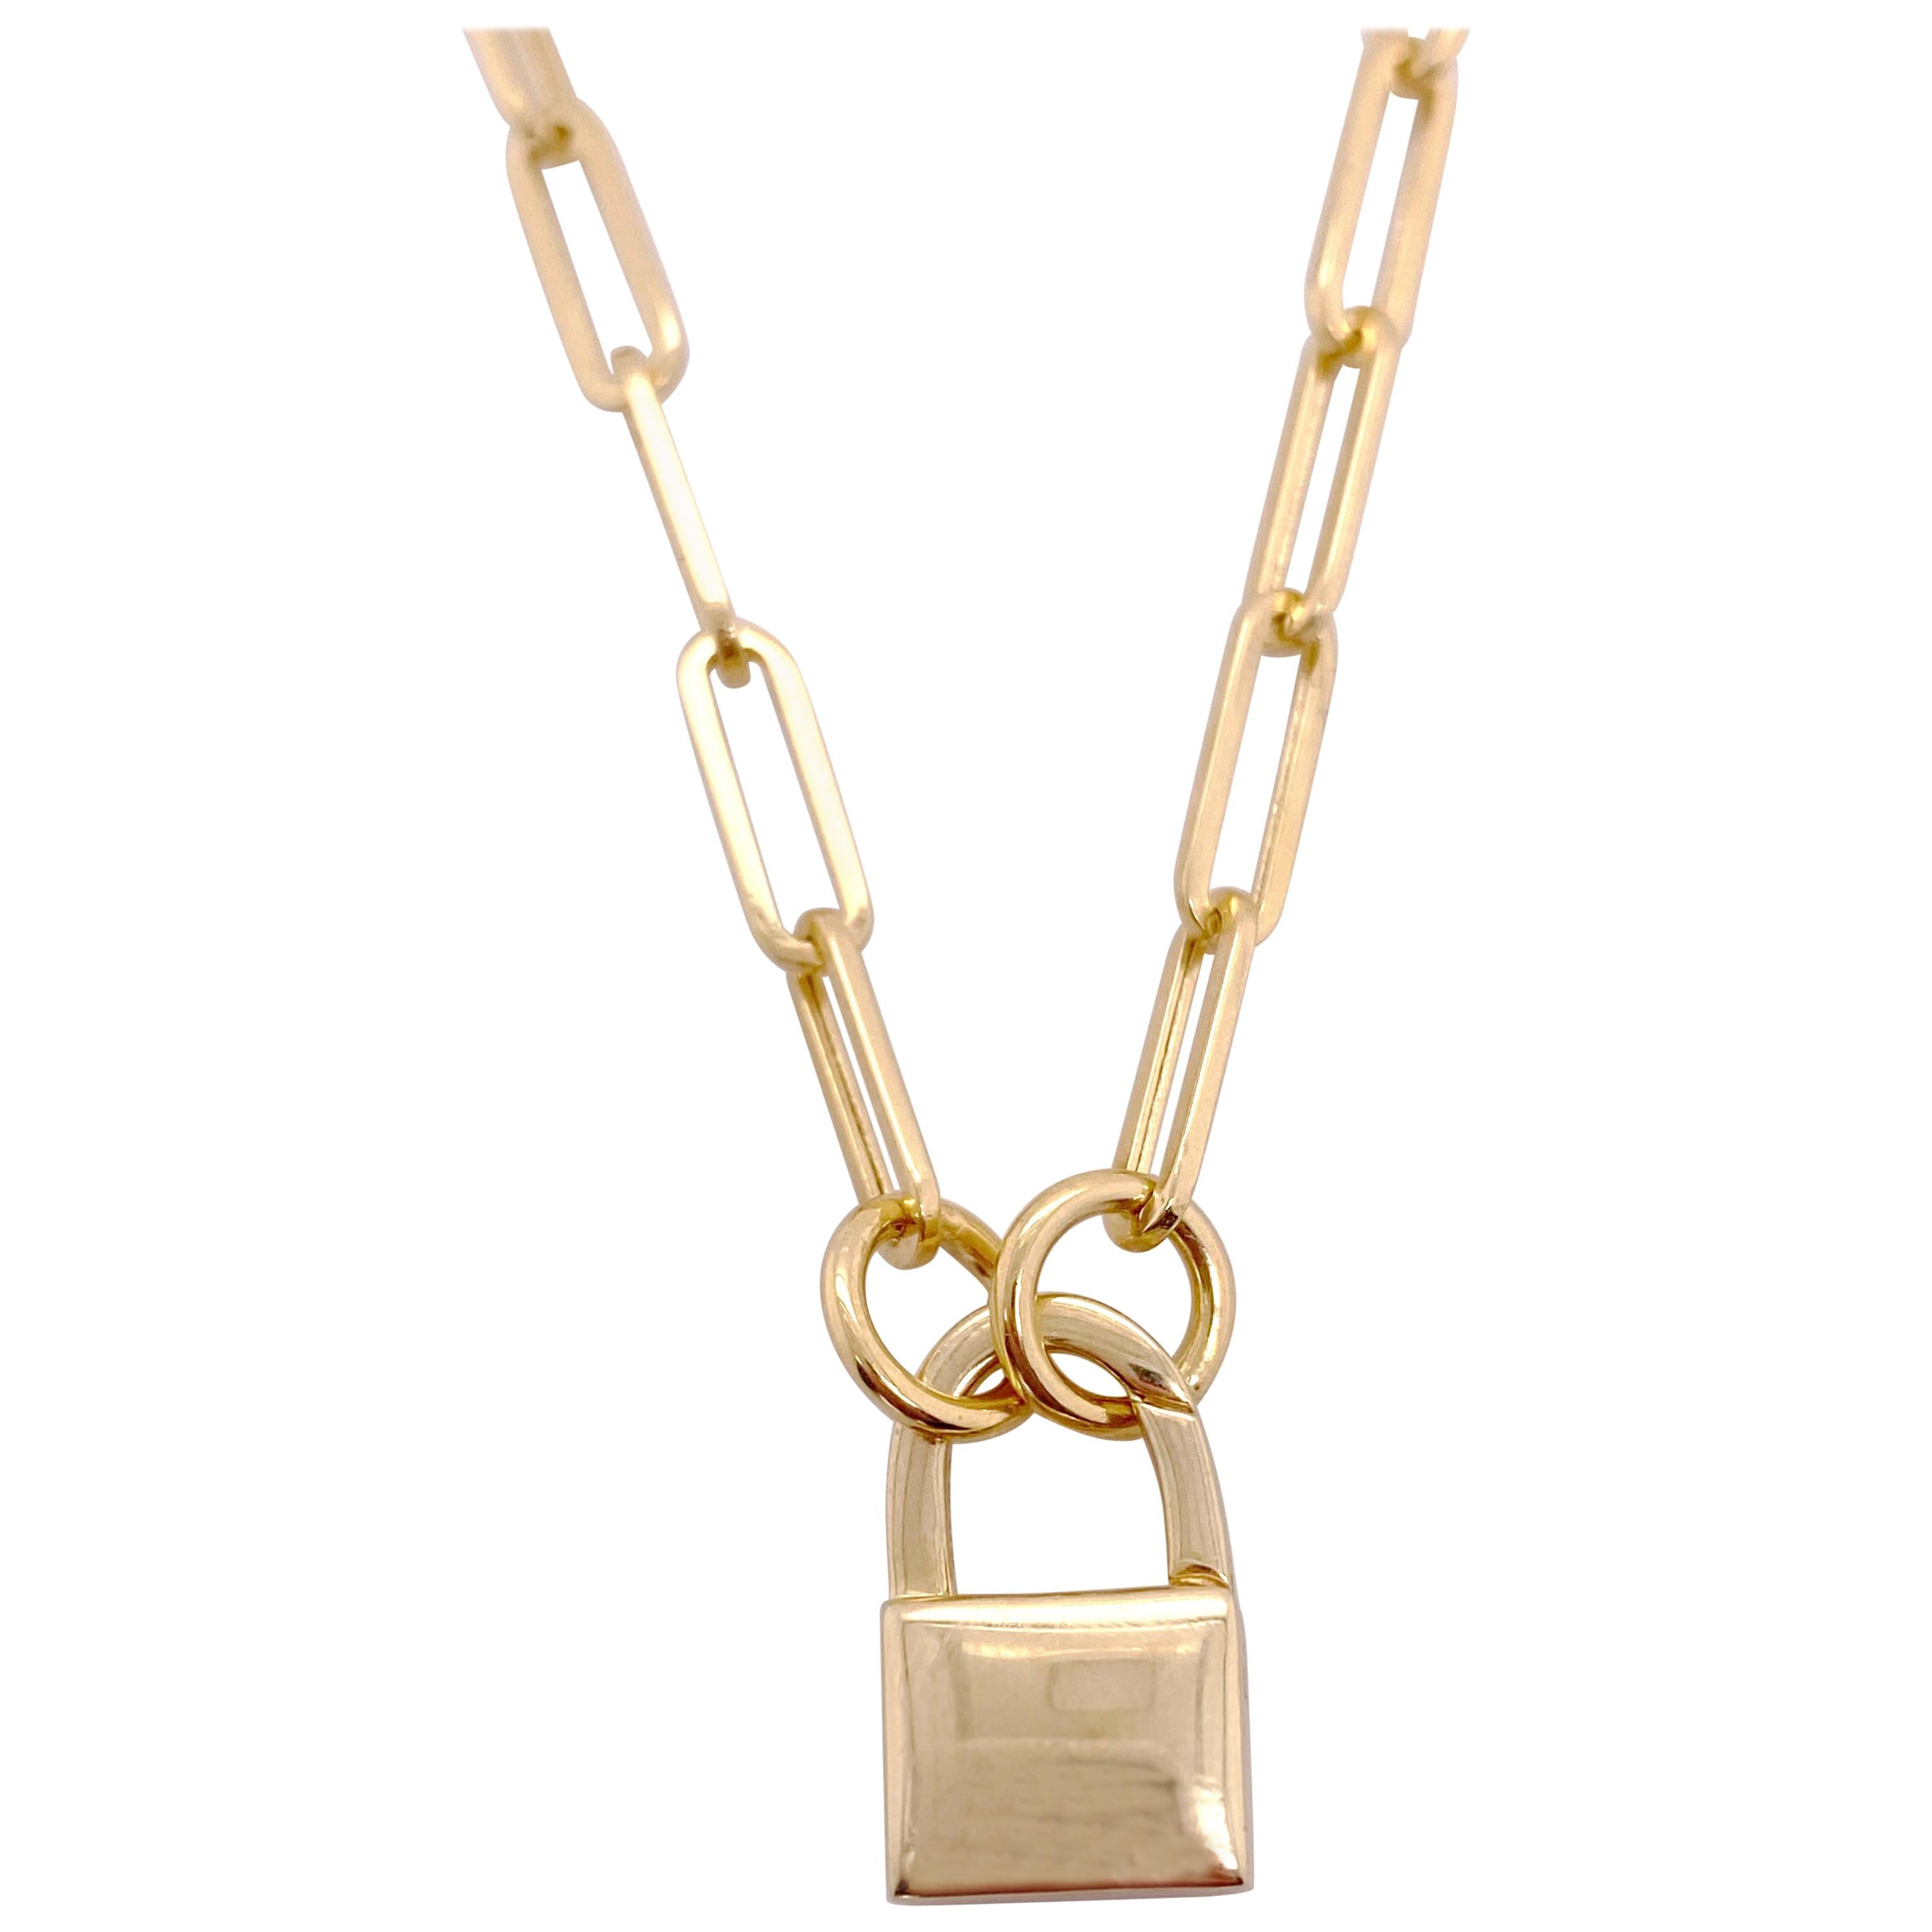 Padlock Customizable Paperclip Chain with Locket, Yellow Gold, Love Locket